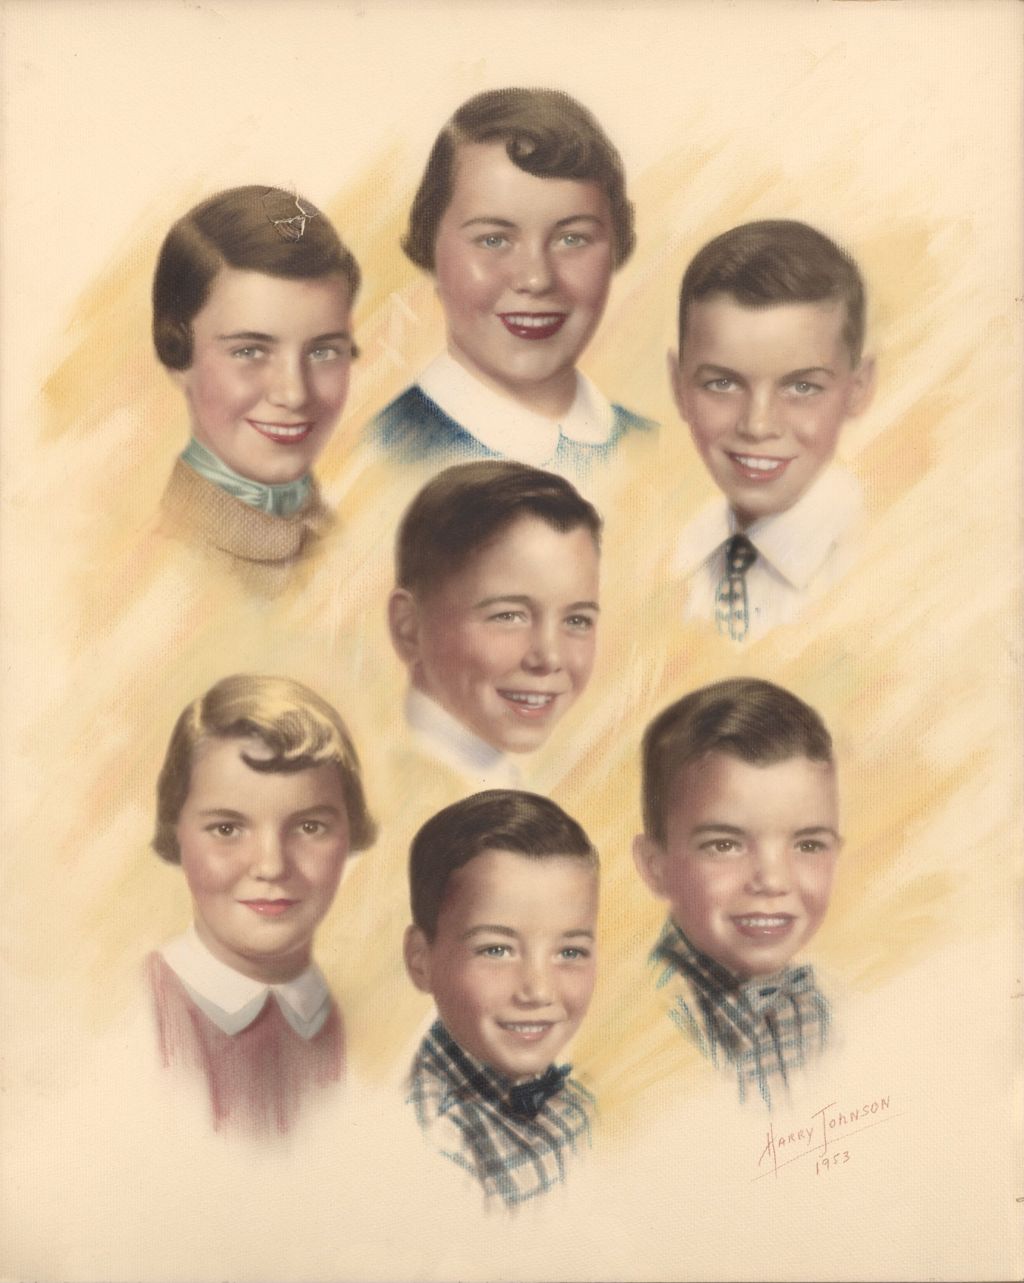 Richard J. Daley's children